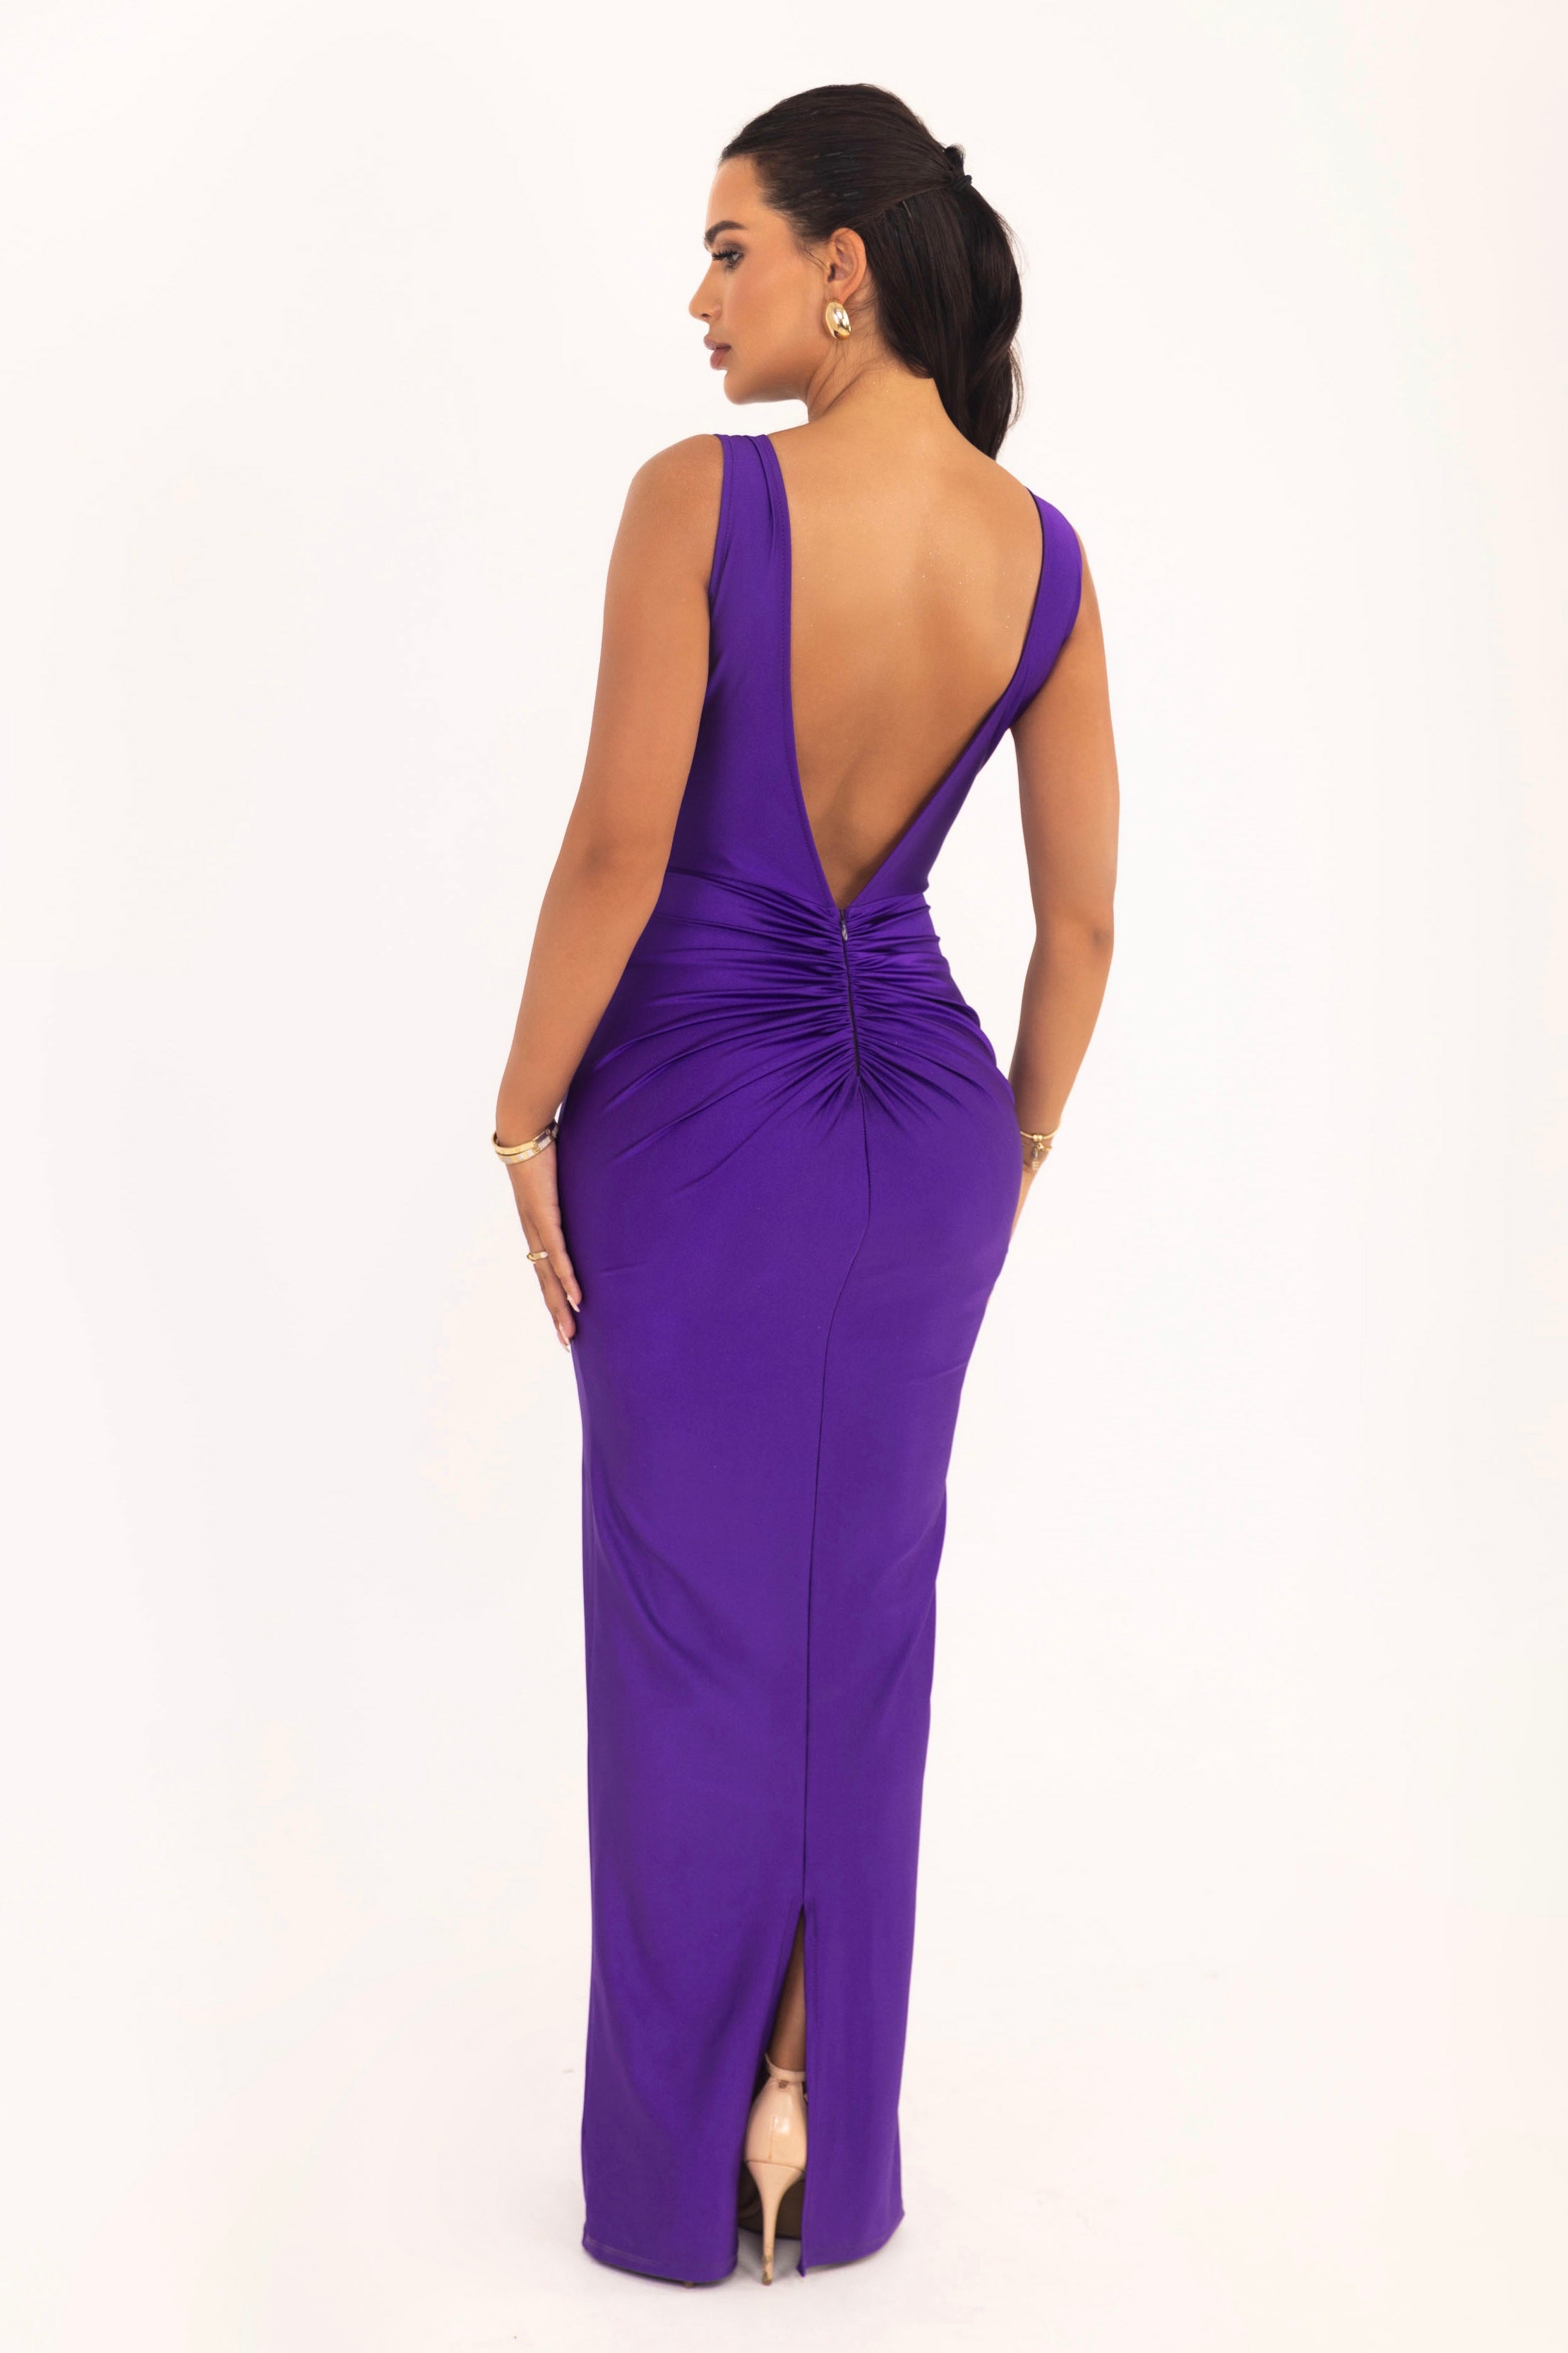 Fionne Purple Dress